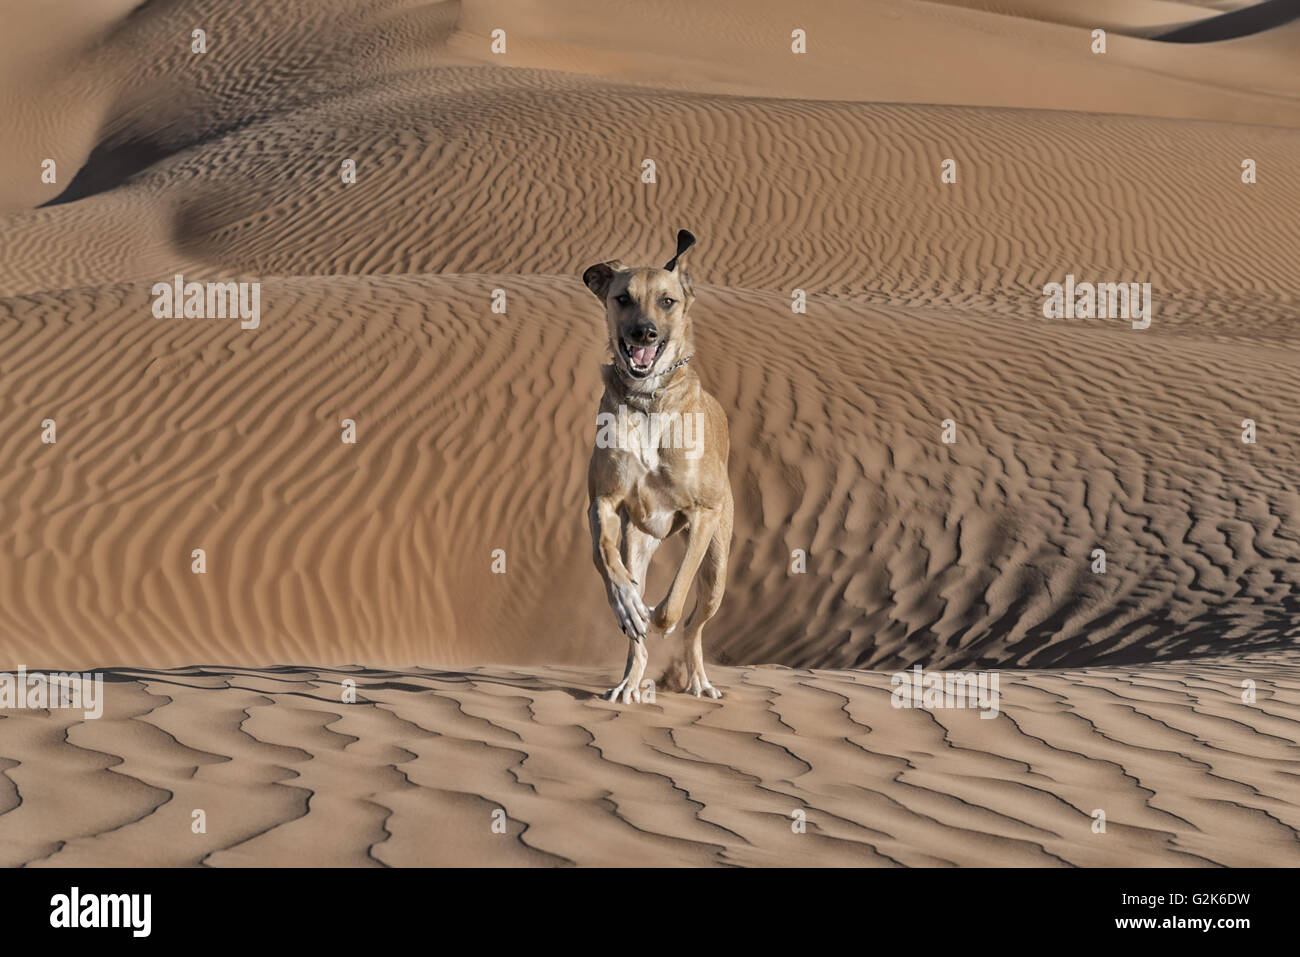 Happy dog running on sand dunes in the Sahara desert. Stock Photo